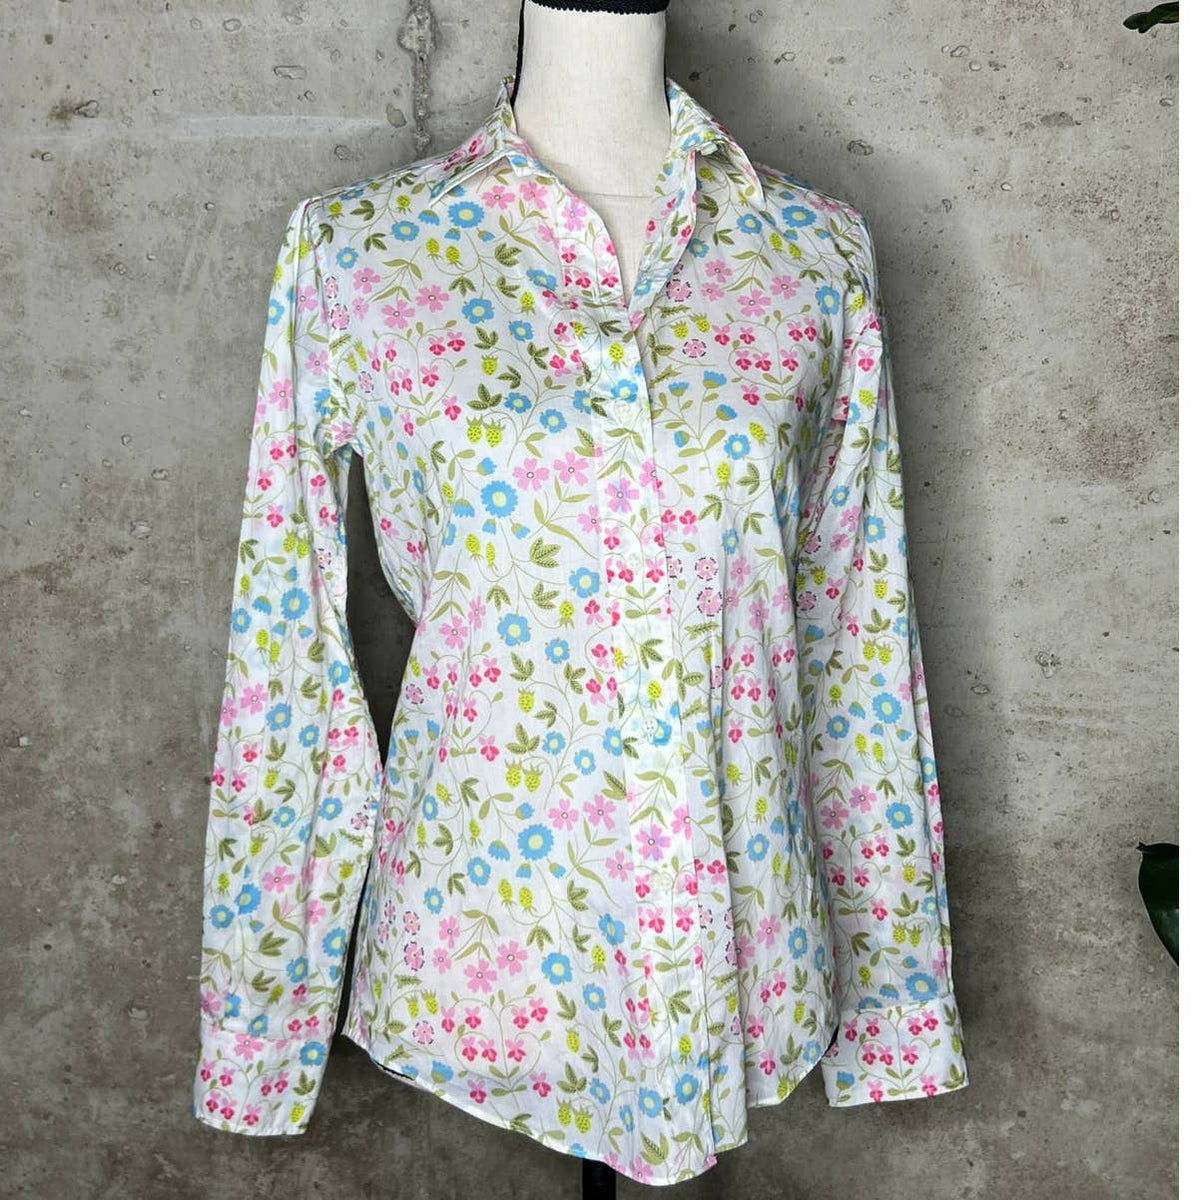 Ann Mashburn Floral Button-Up Blouse Sz. Small